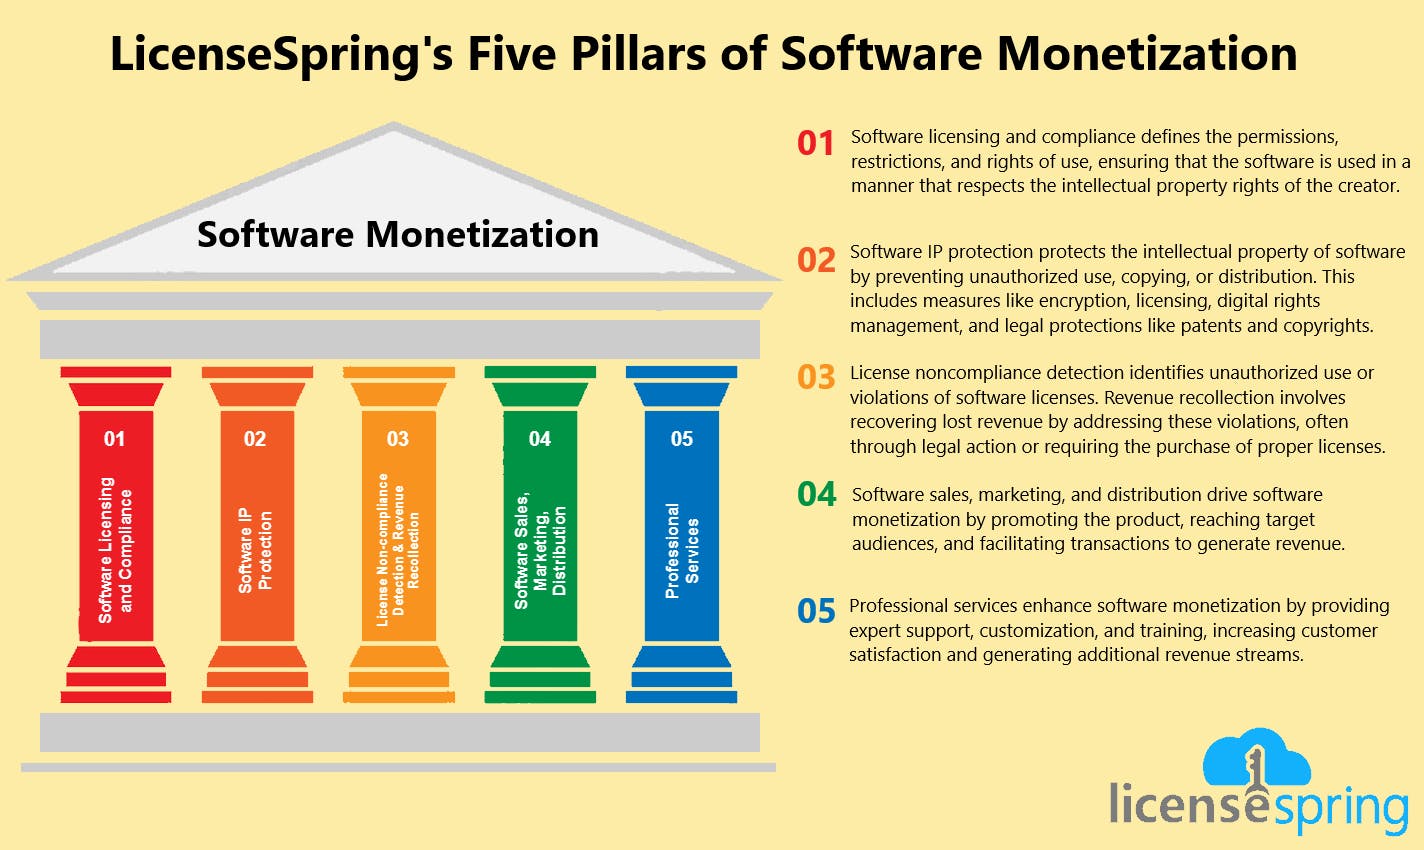 LicenseSpring's five pillars of software monetization.